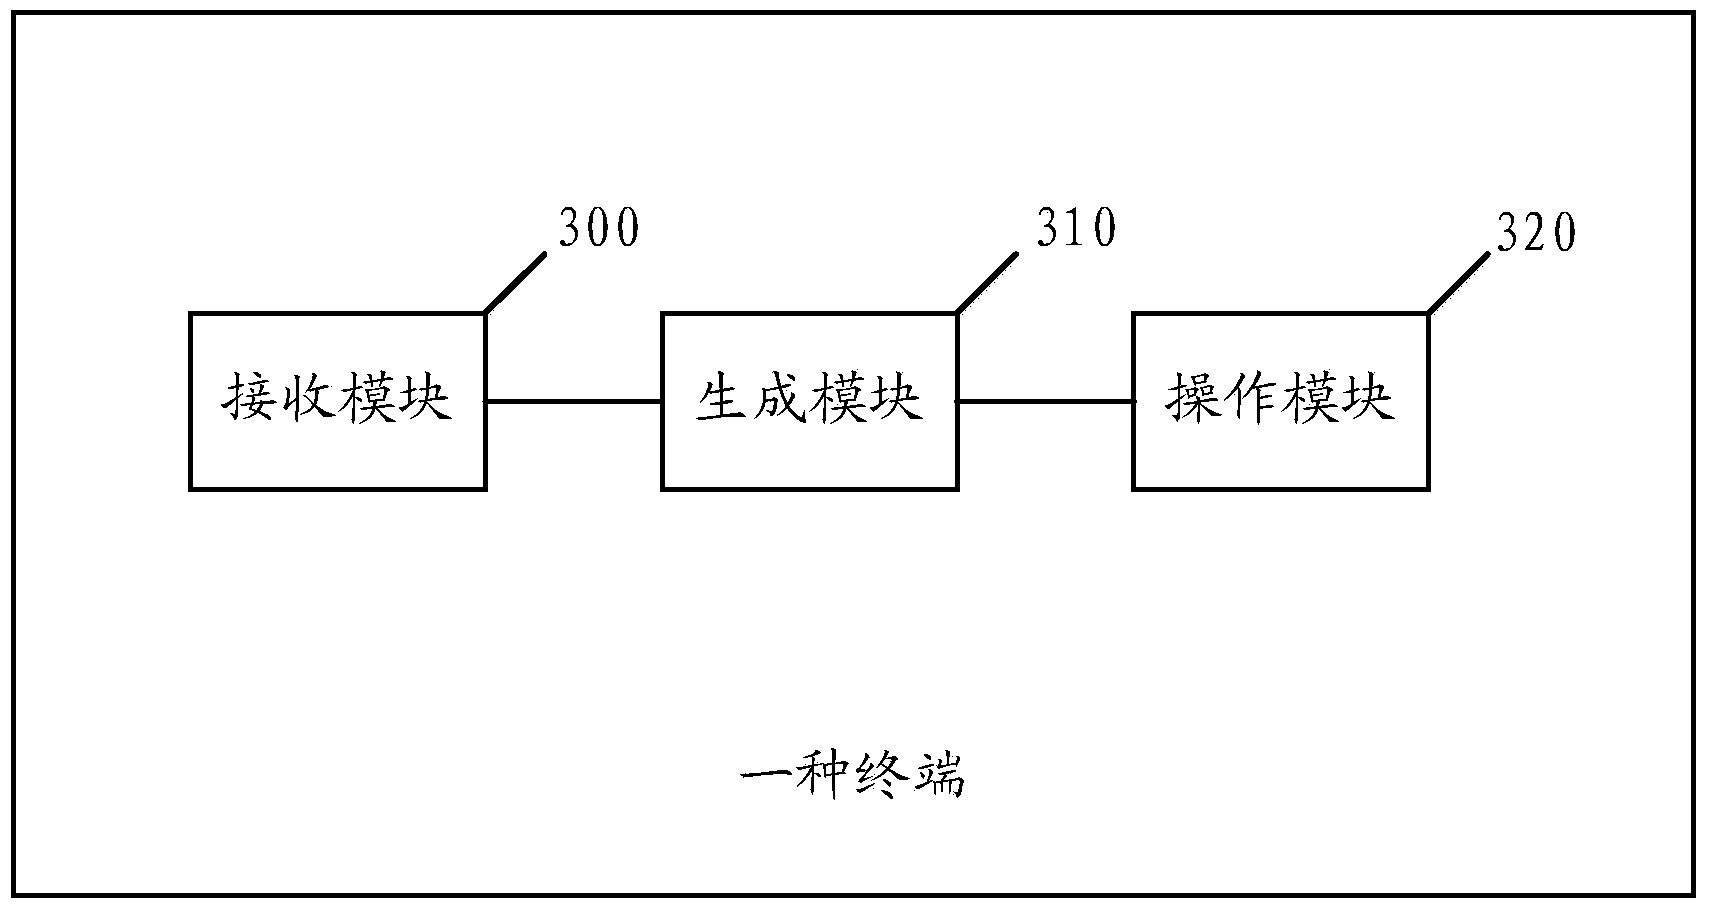 Terminal pairing method, terminal and system